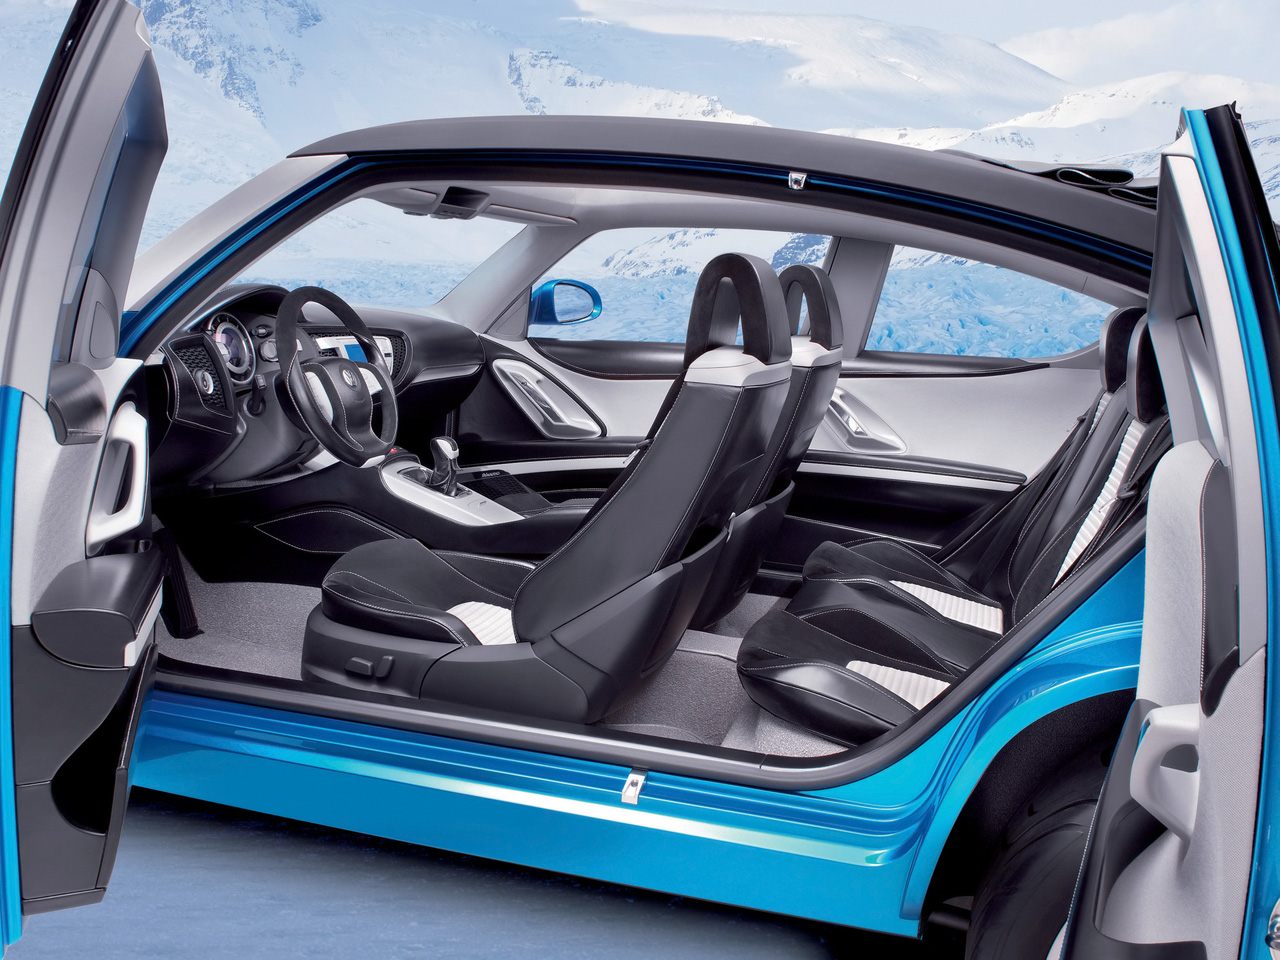 Volkswagen Concept A HD wallpapers, Desktop wallpaper - most viewed